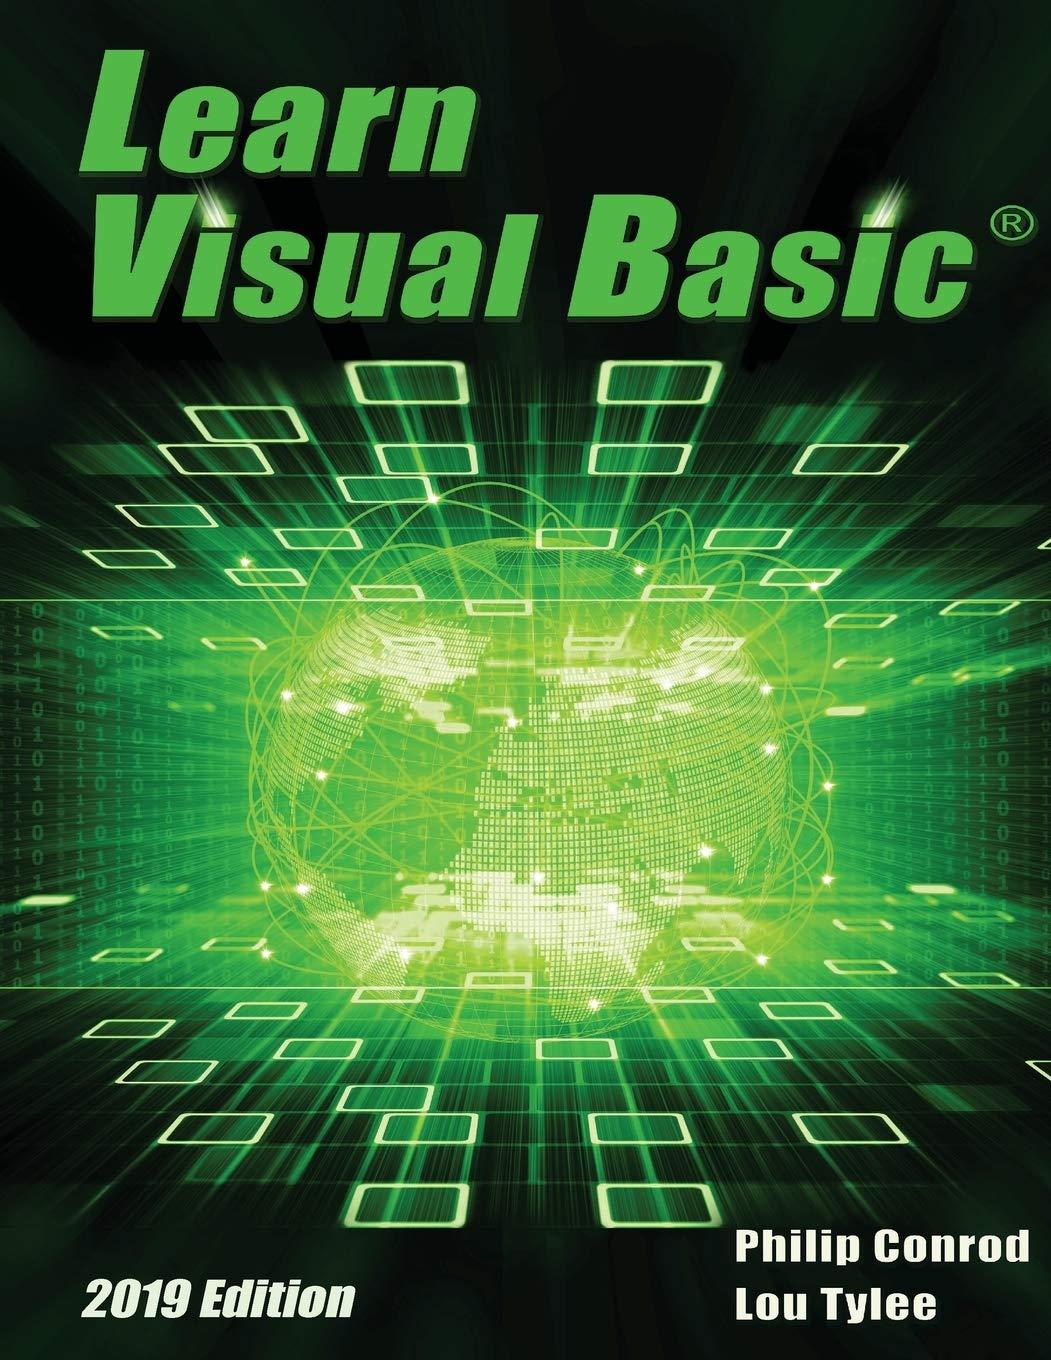 learn visual basic 2019 edition philip conrod, lou tylee 1951077105, 978-1951077105